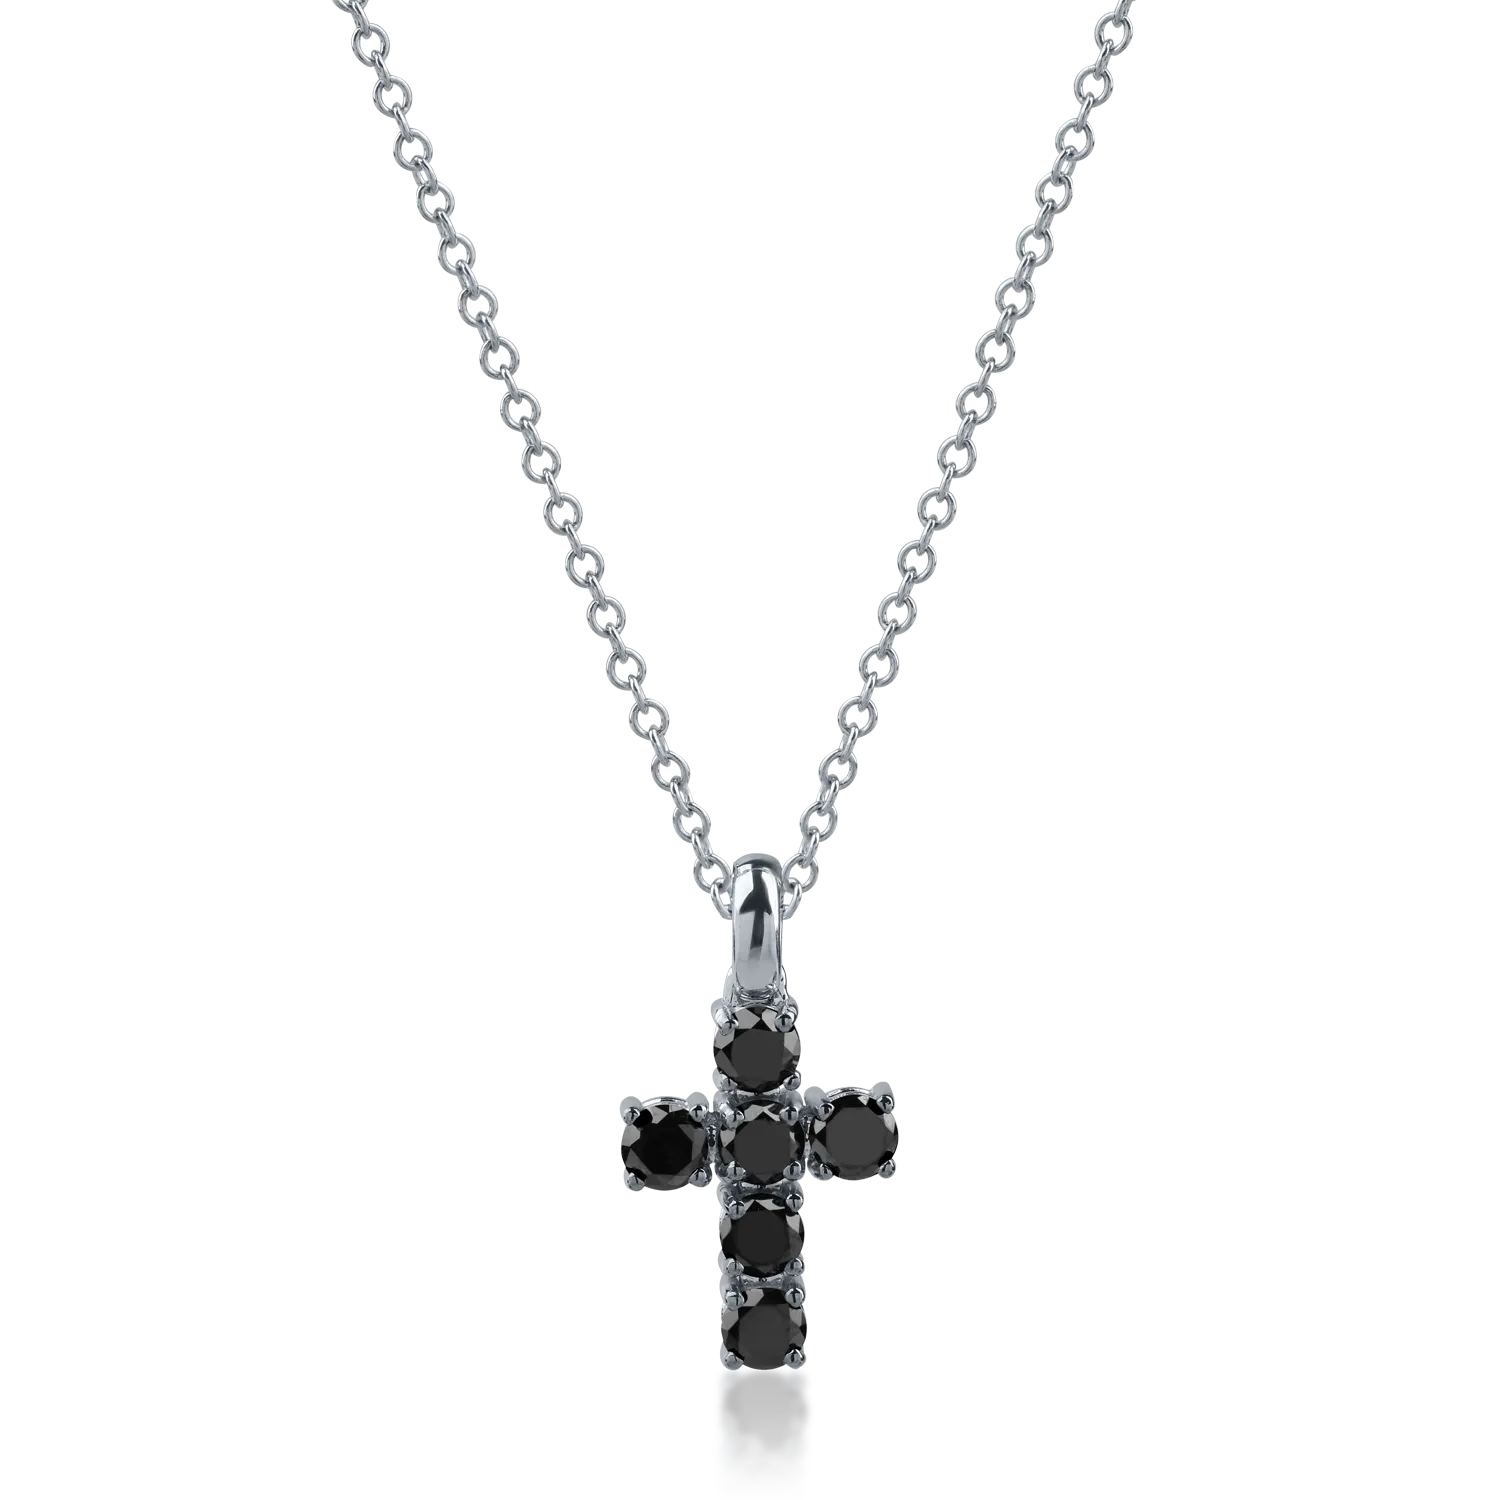 White gold cross pendant necklace with 0.62ct black diamonds